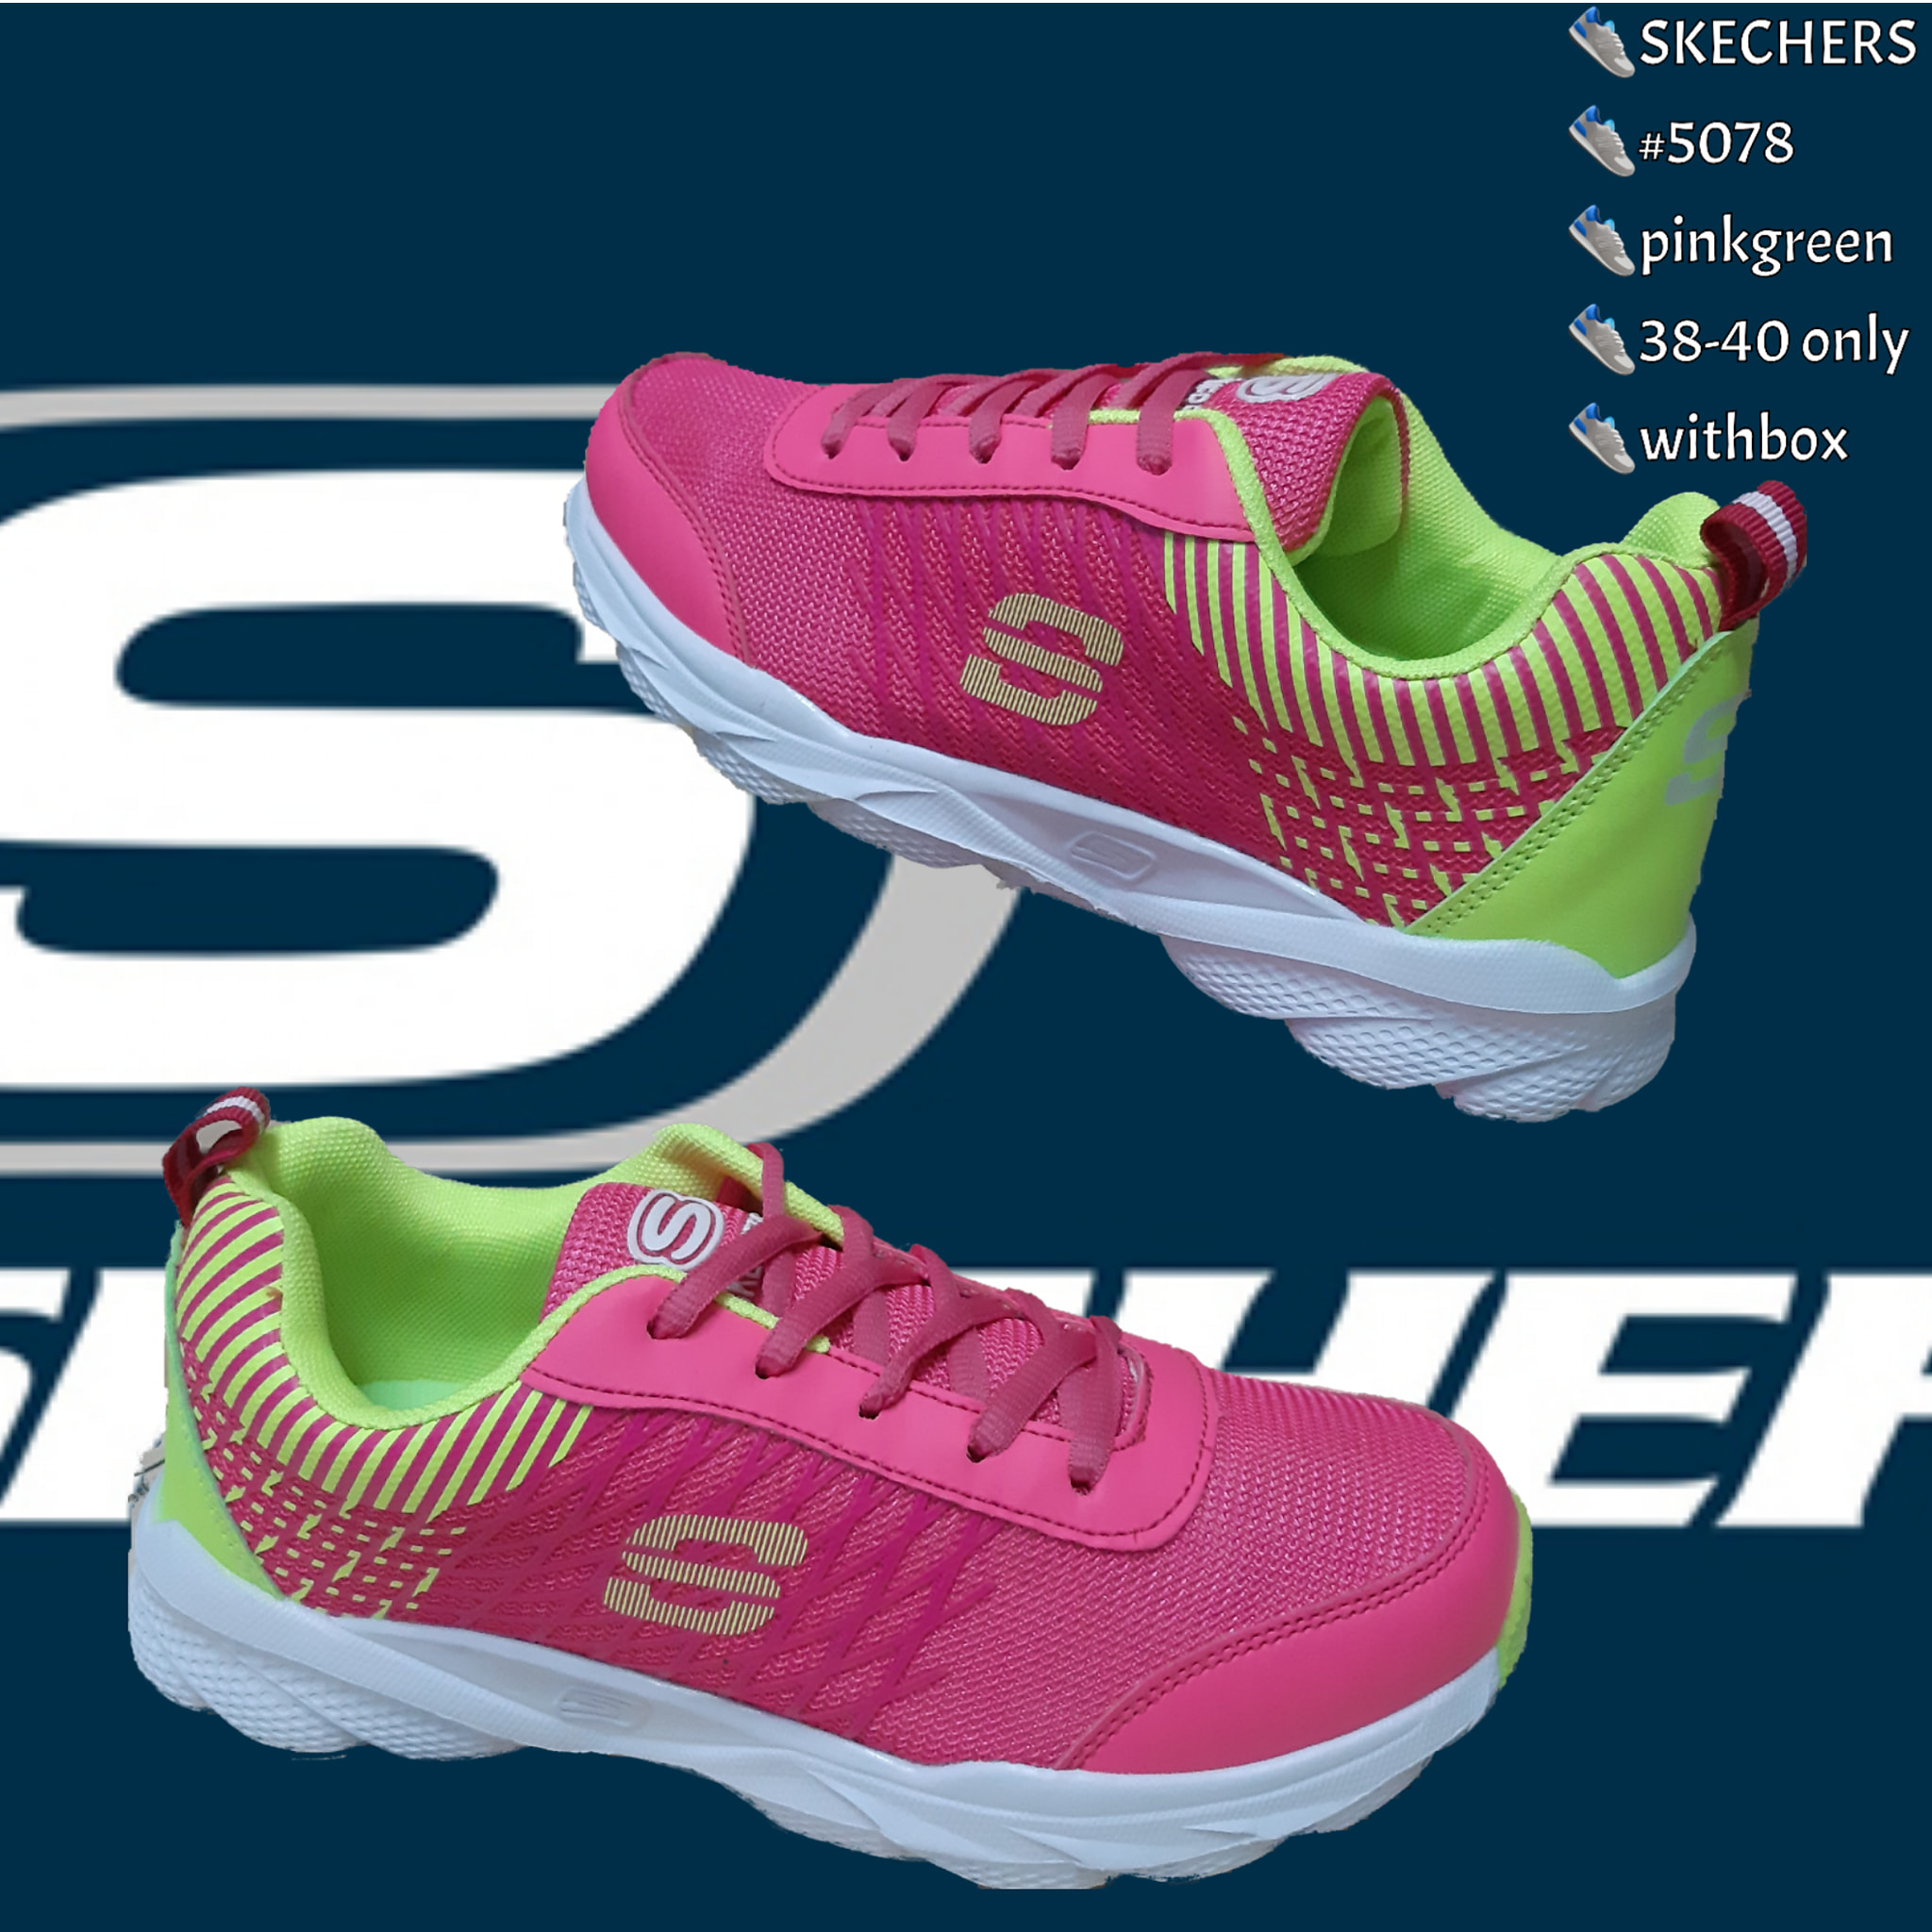 skechers rubber shoes for women